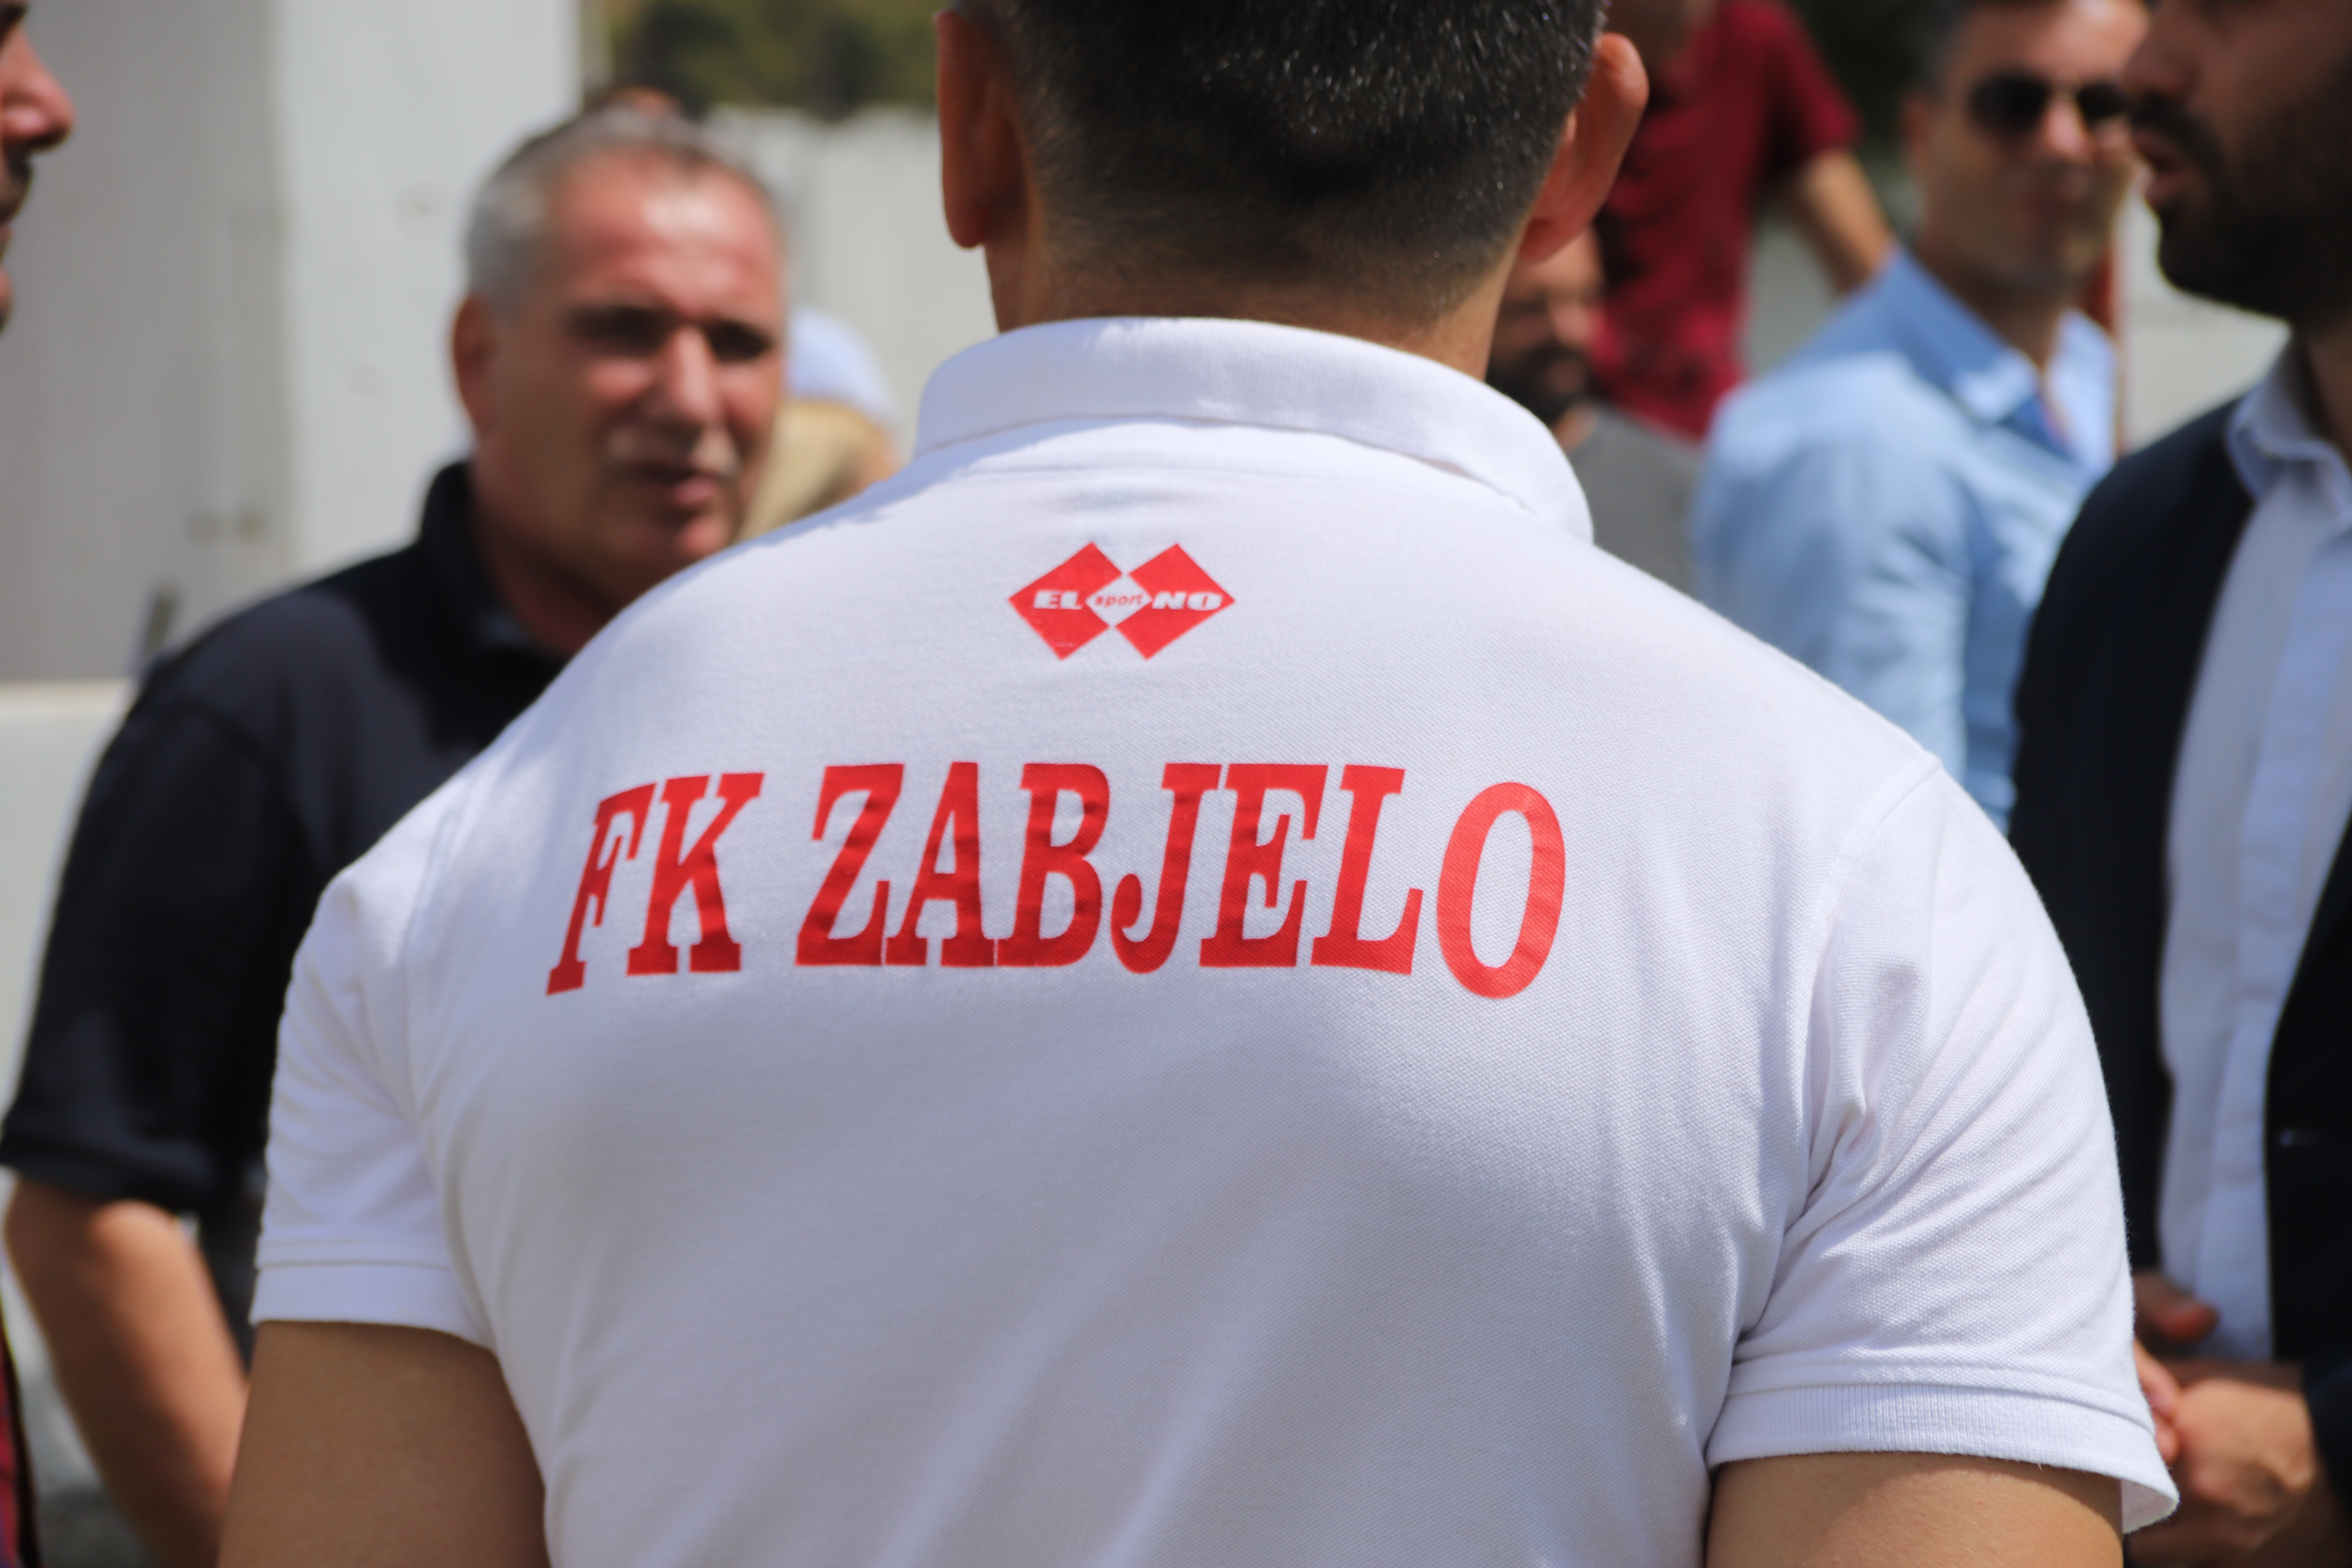 Glavni grad ustupa parcelu FK "Zabjelo" za izgradnju pomoćnog terena: Nastavak podrške kultnom klubu